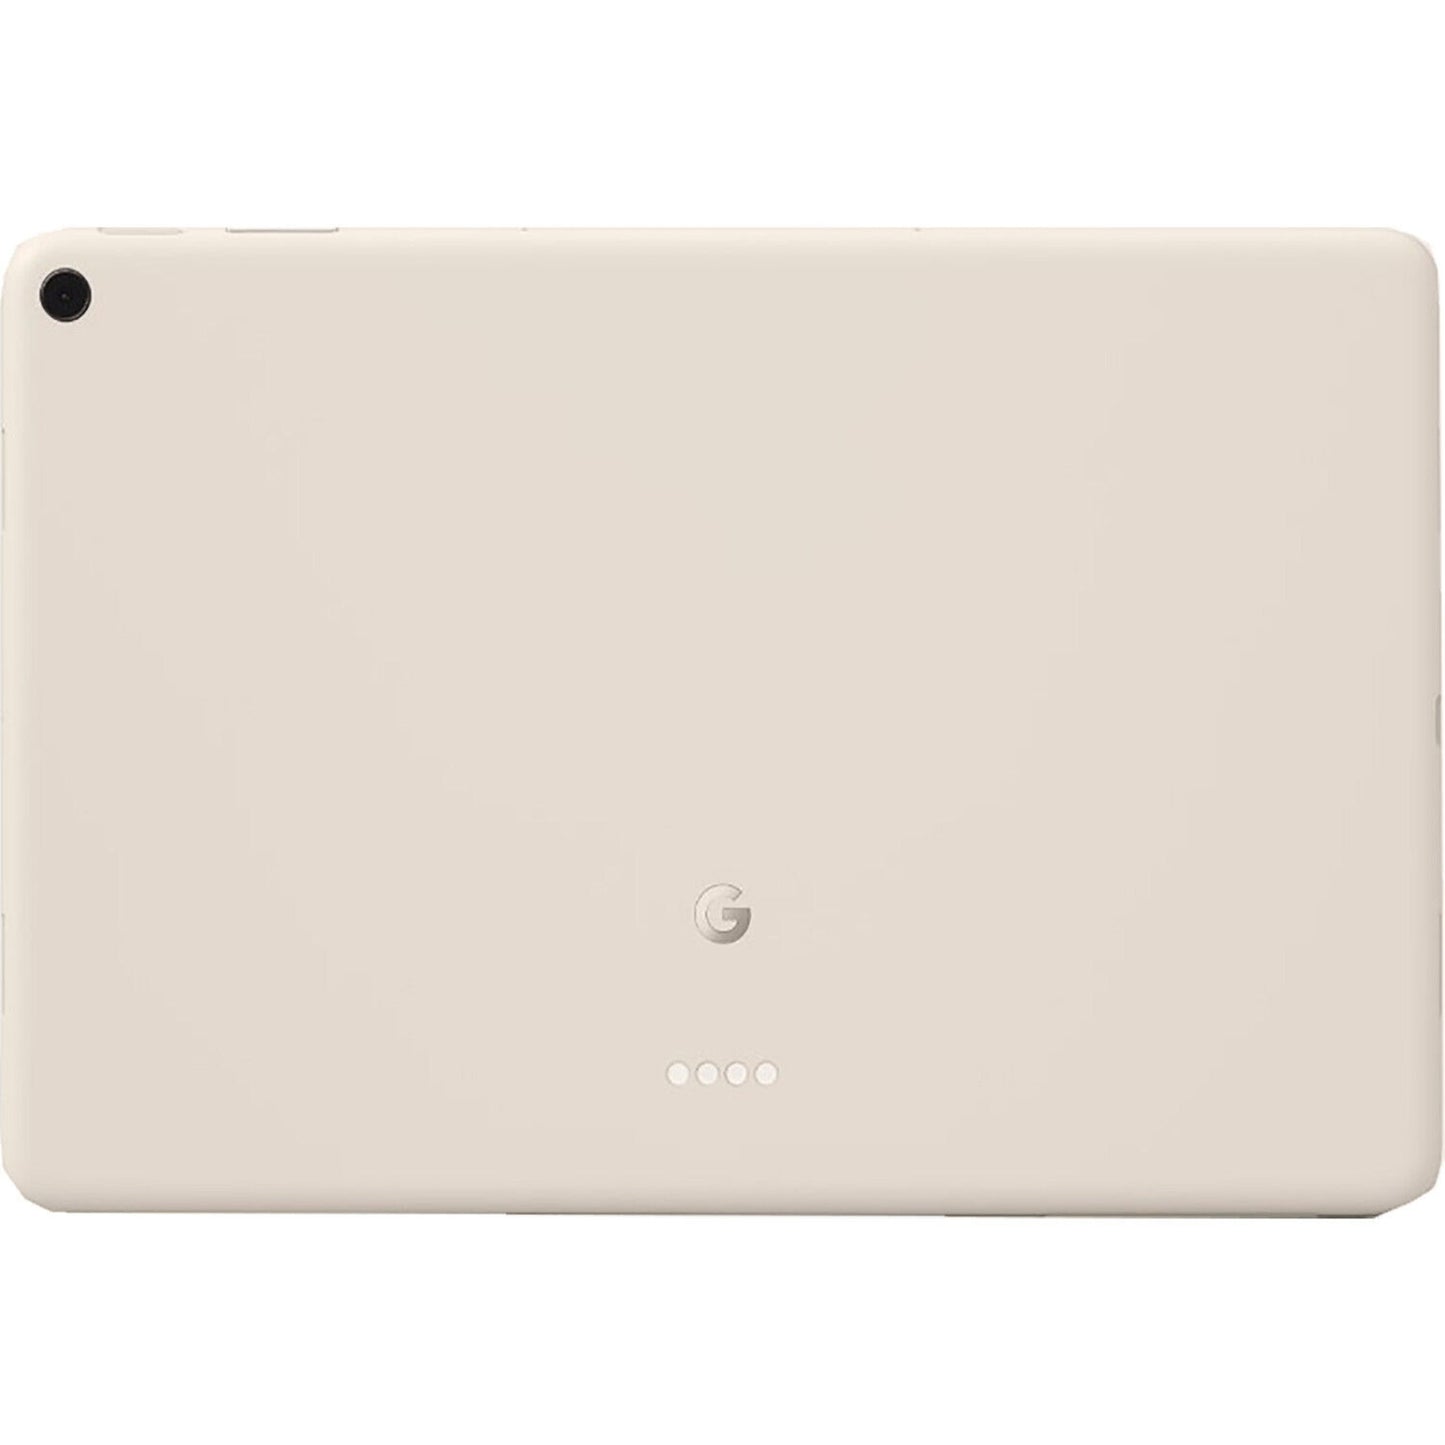 Google Pixel Tablet Wifi (8GB)